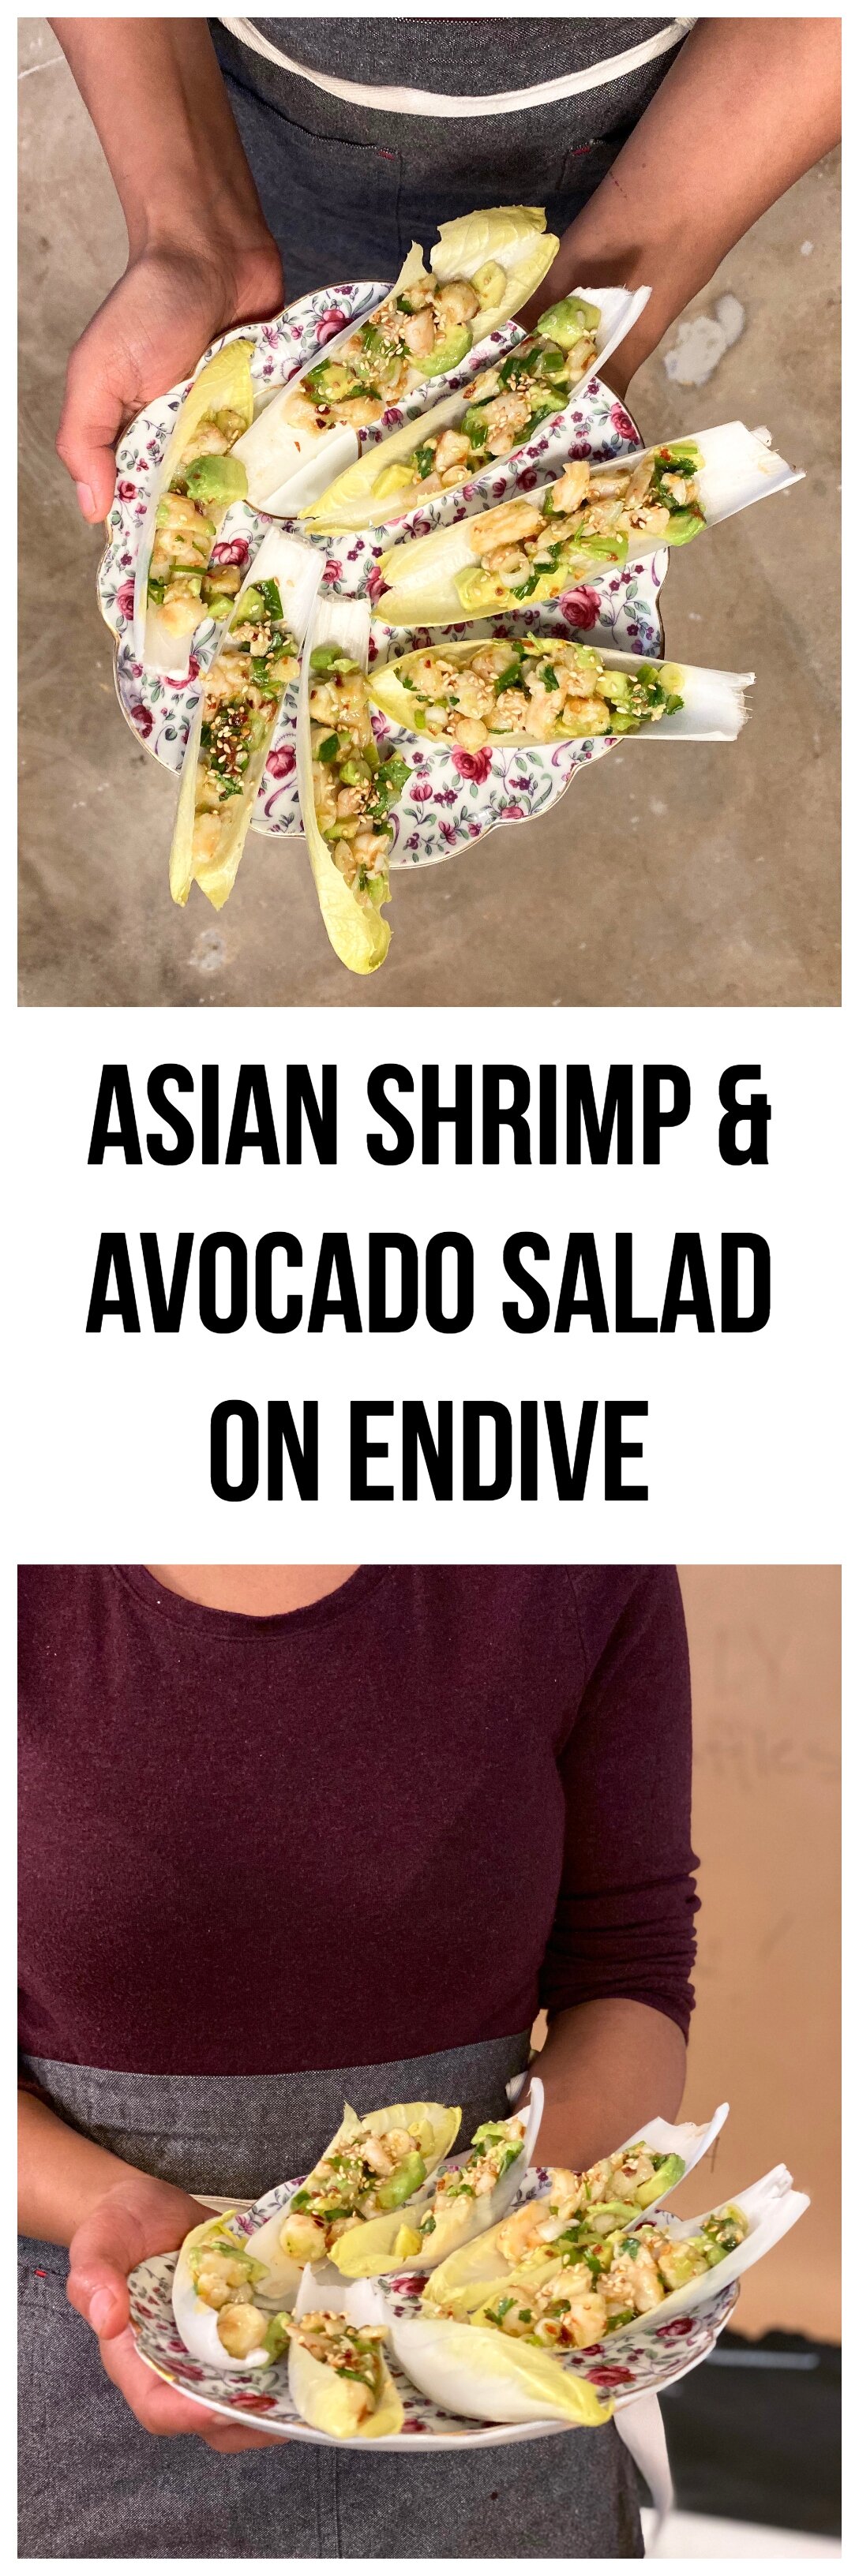 ASIAN SHRIMP AND AVOCADO SALAD ON ENDIVE